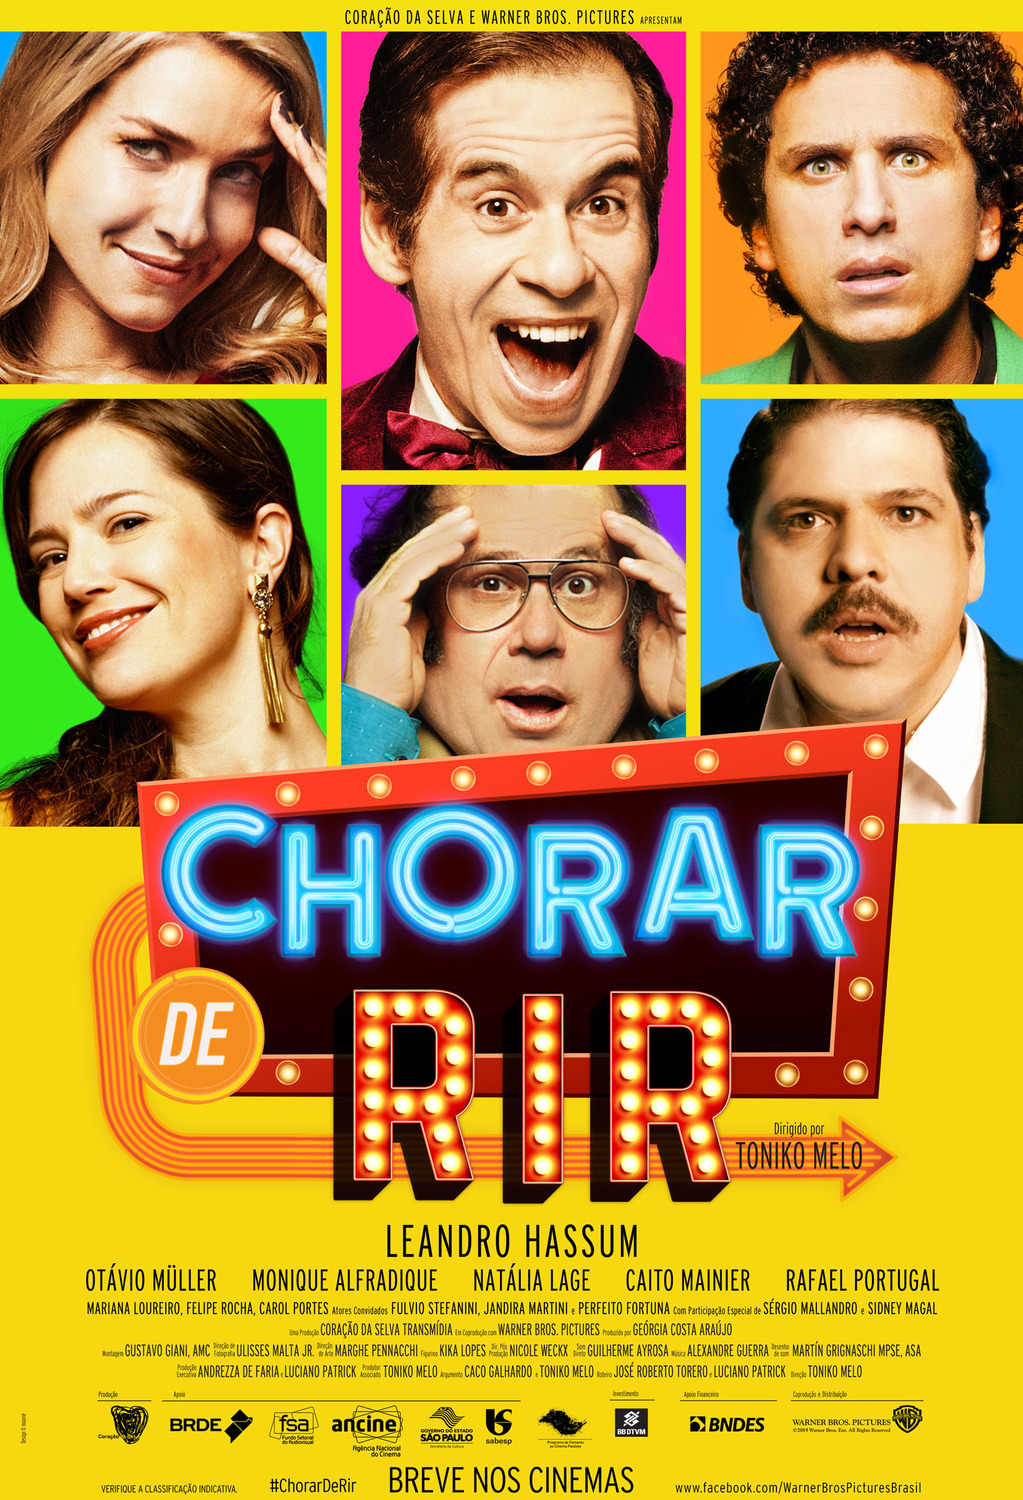 Extra Large Movie Poster Image for Chorar de Rir 